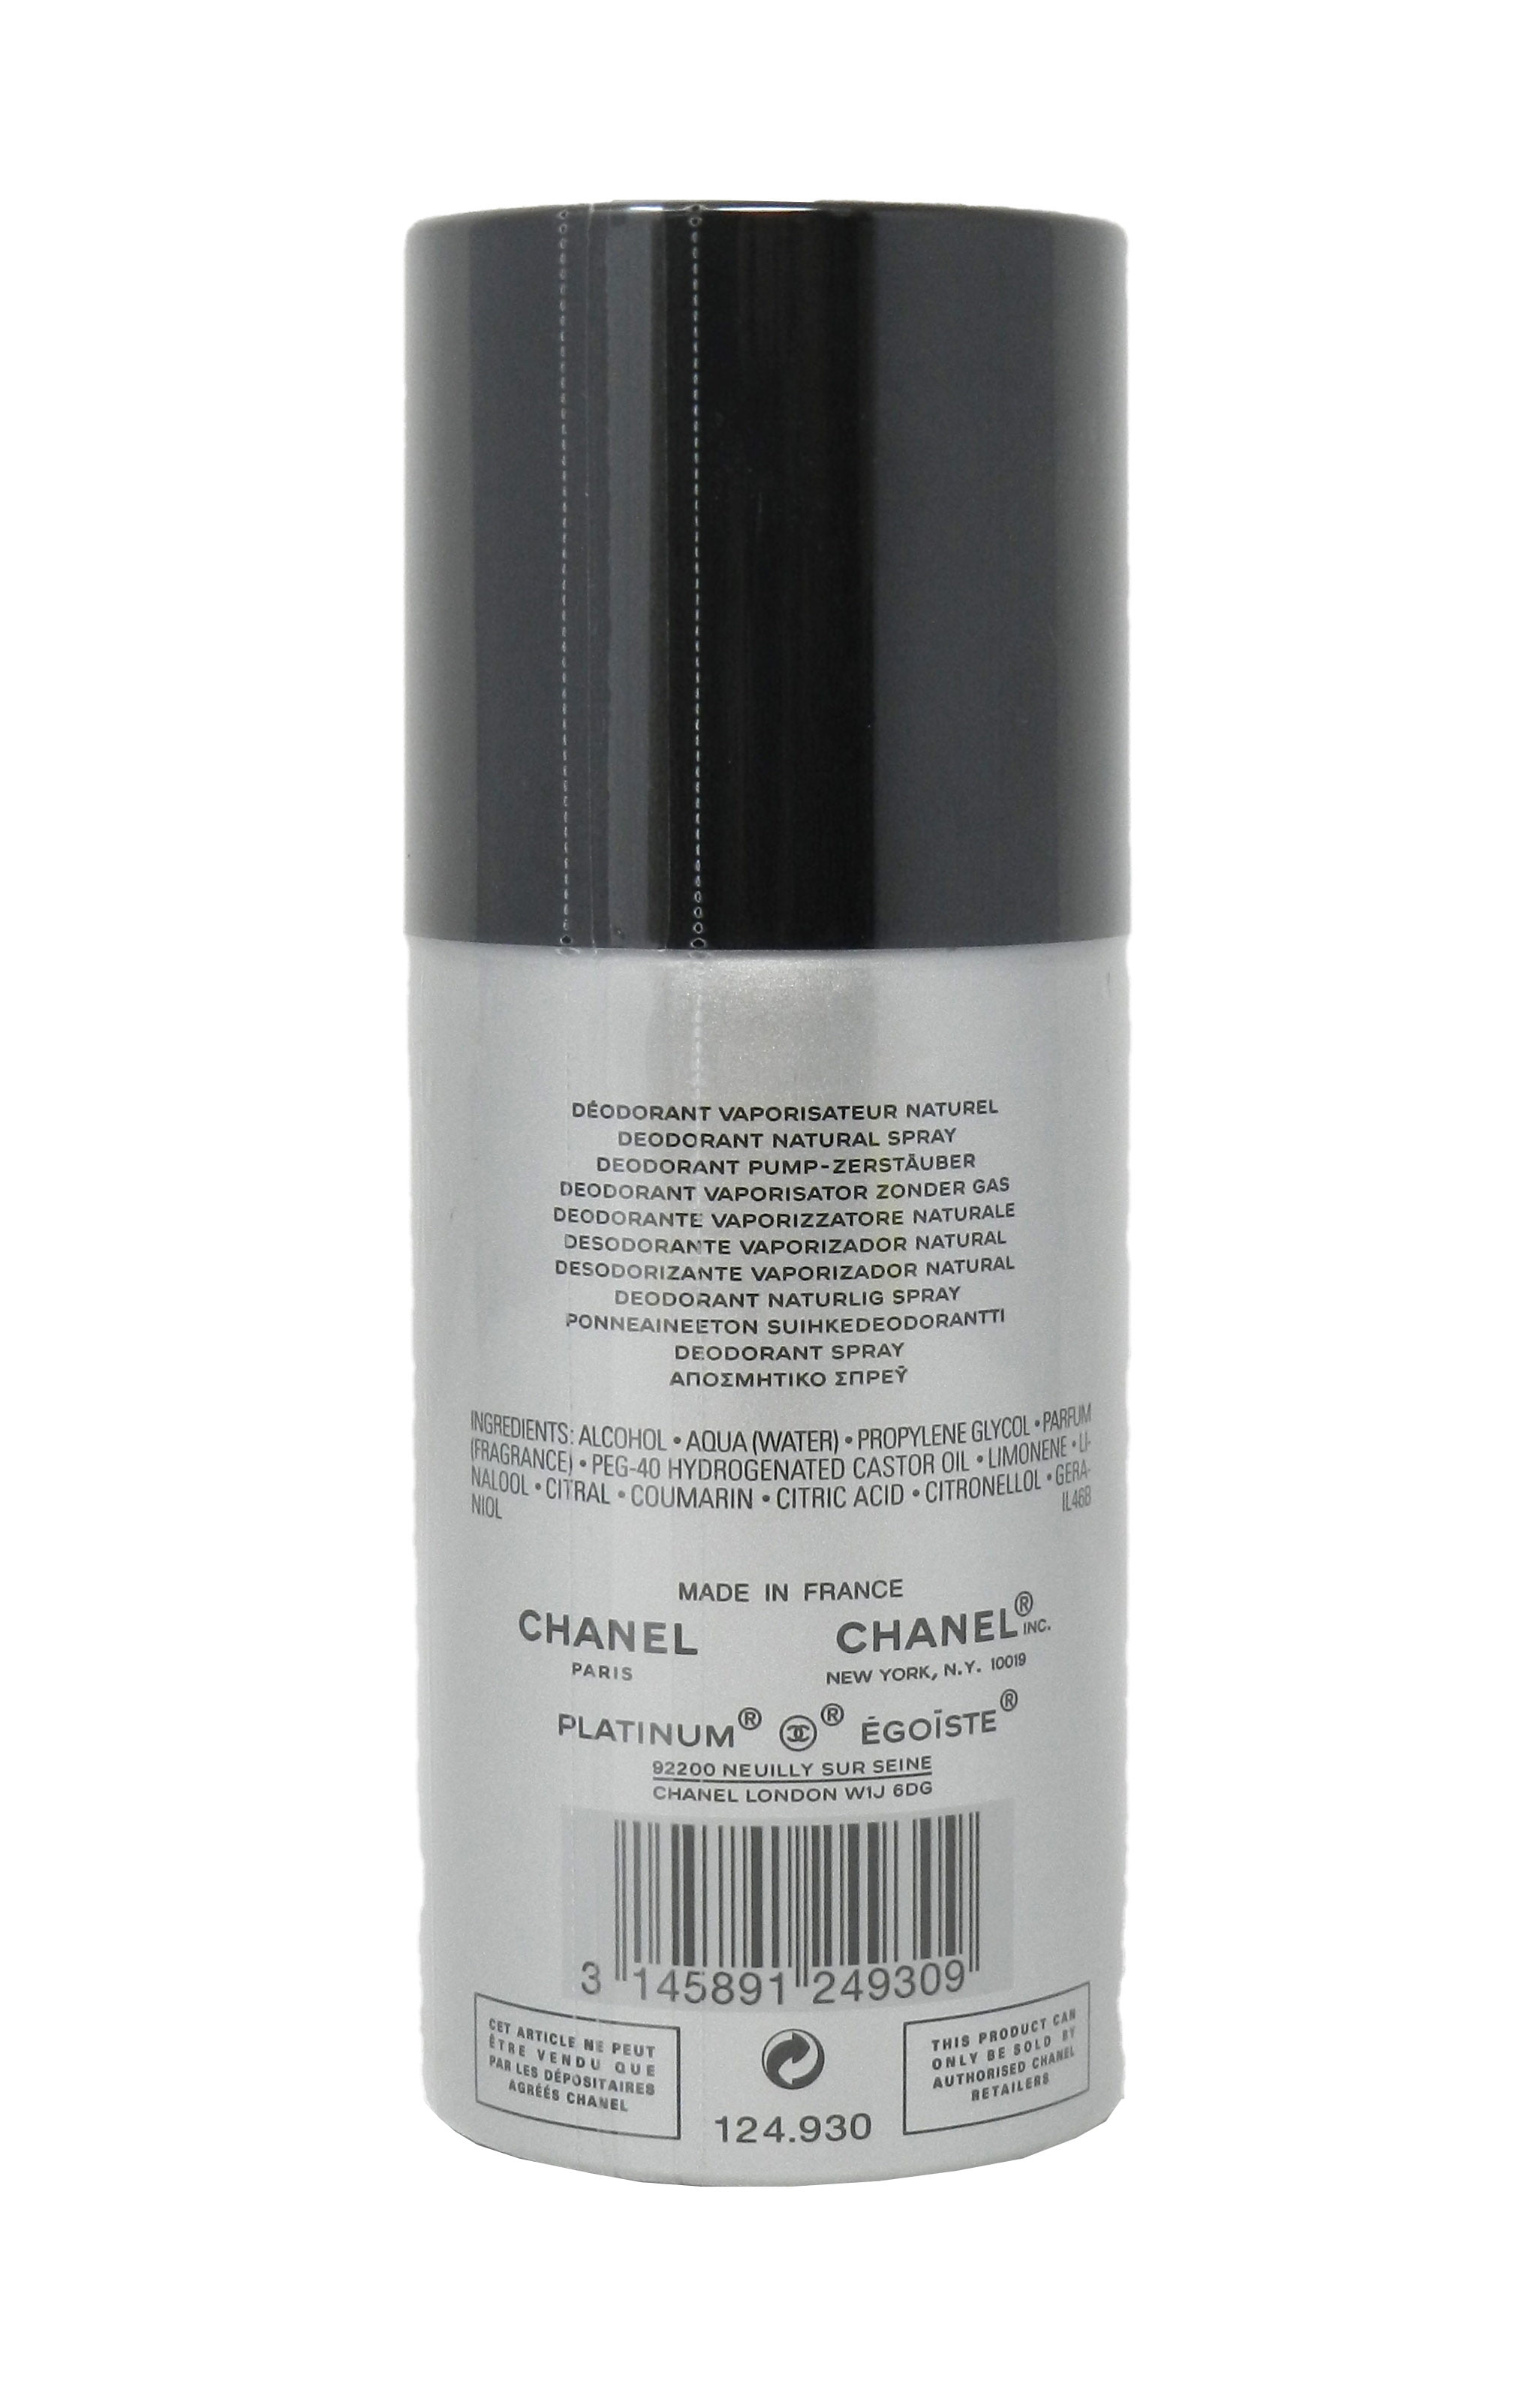 CHANEL NO 5 Le Deodorant Vaporisateur Spray 100ml Please Read